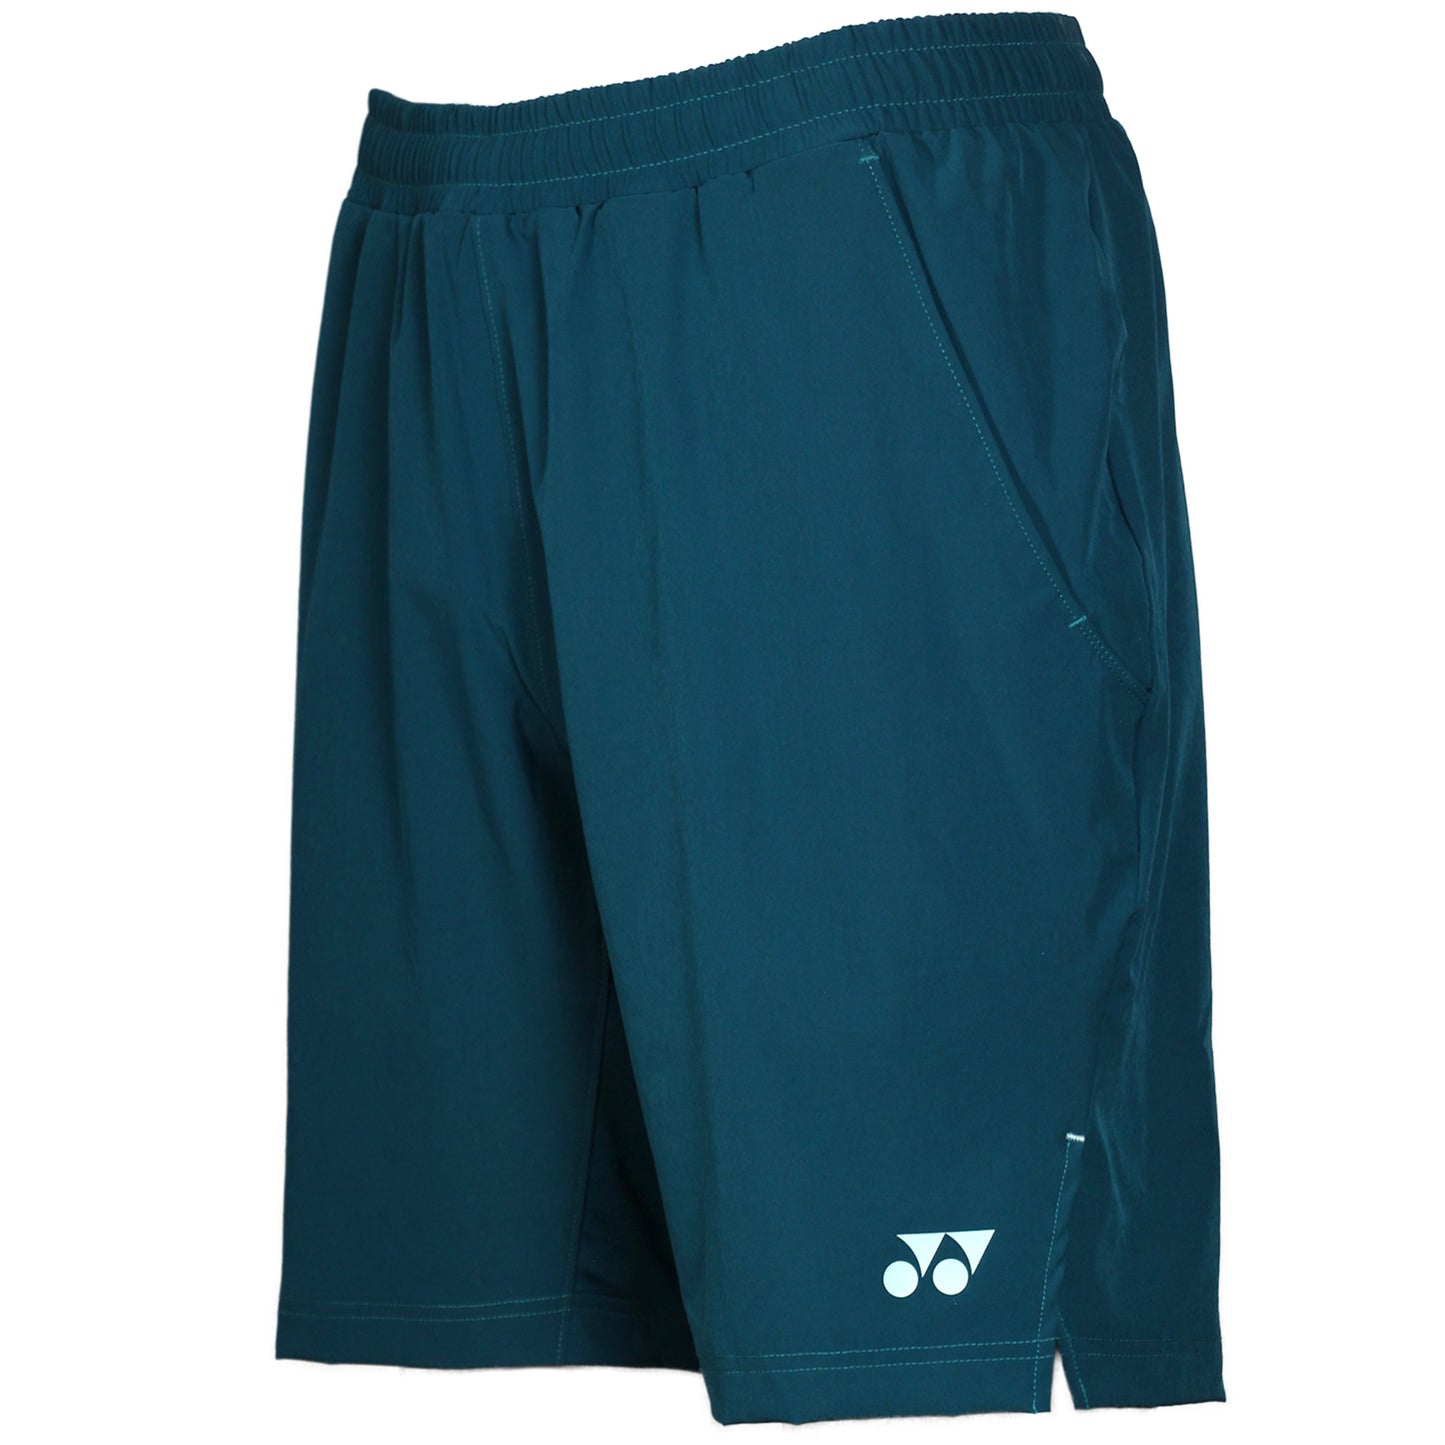 Yonex Men's AO Short 15161 Blue Green